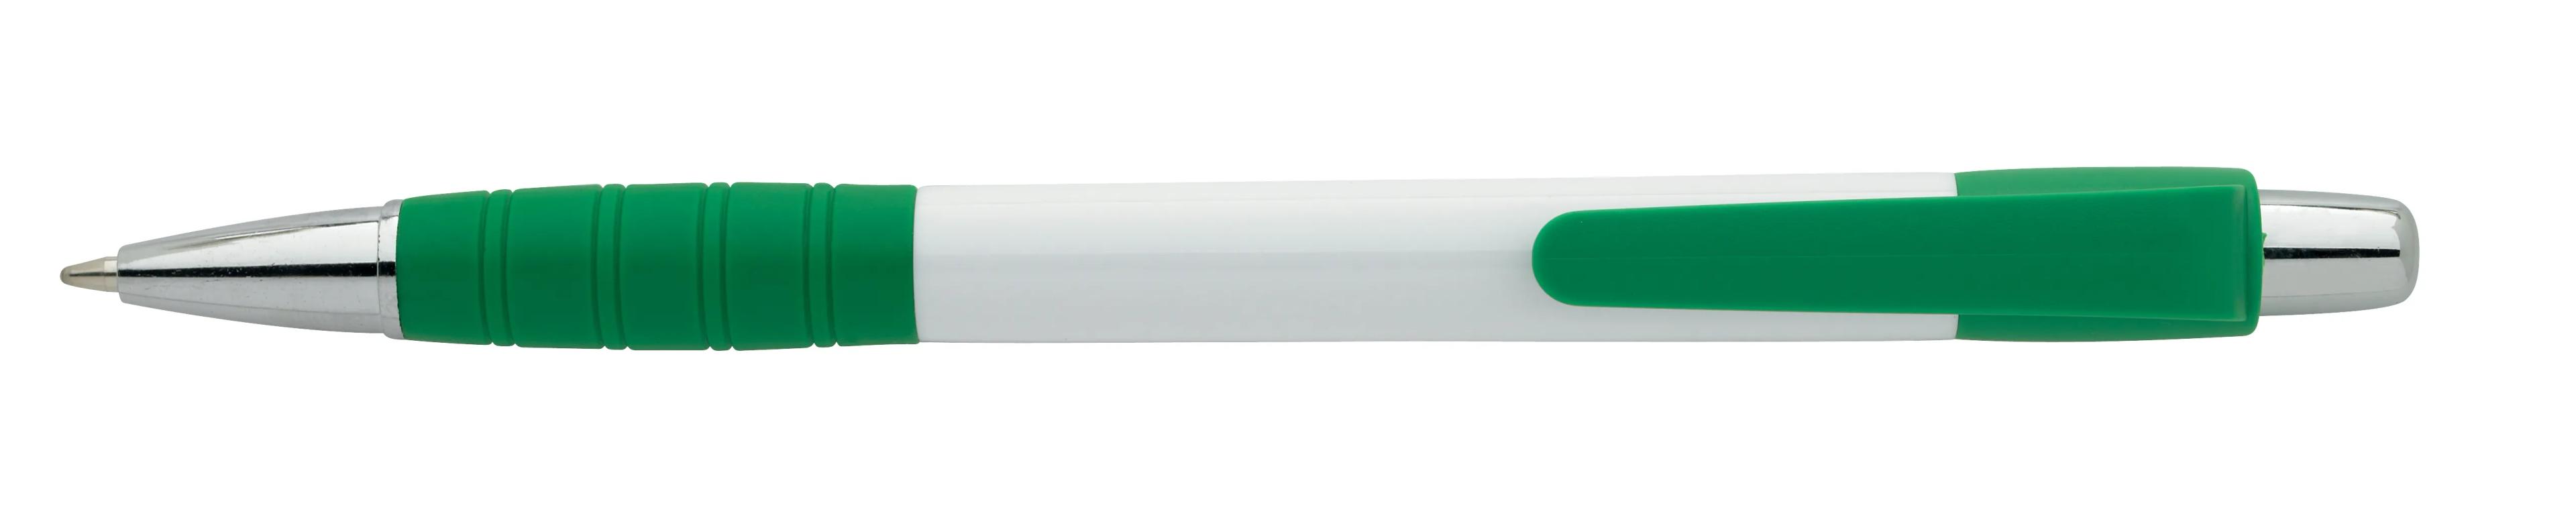 White Element Pen 5 of 43